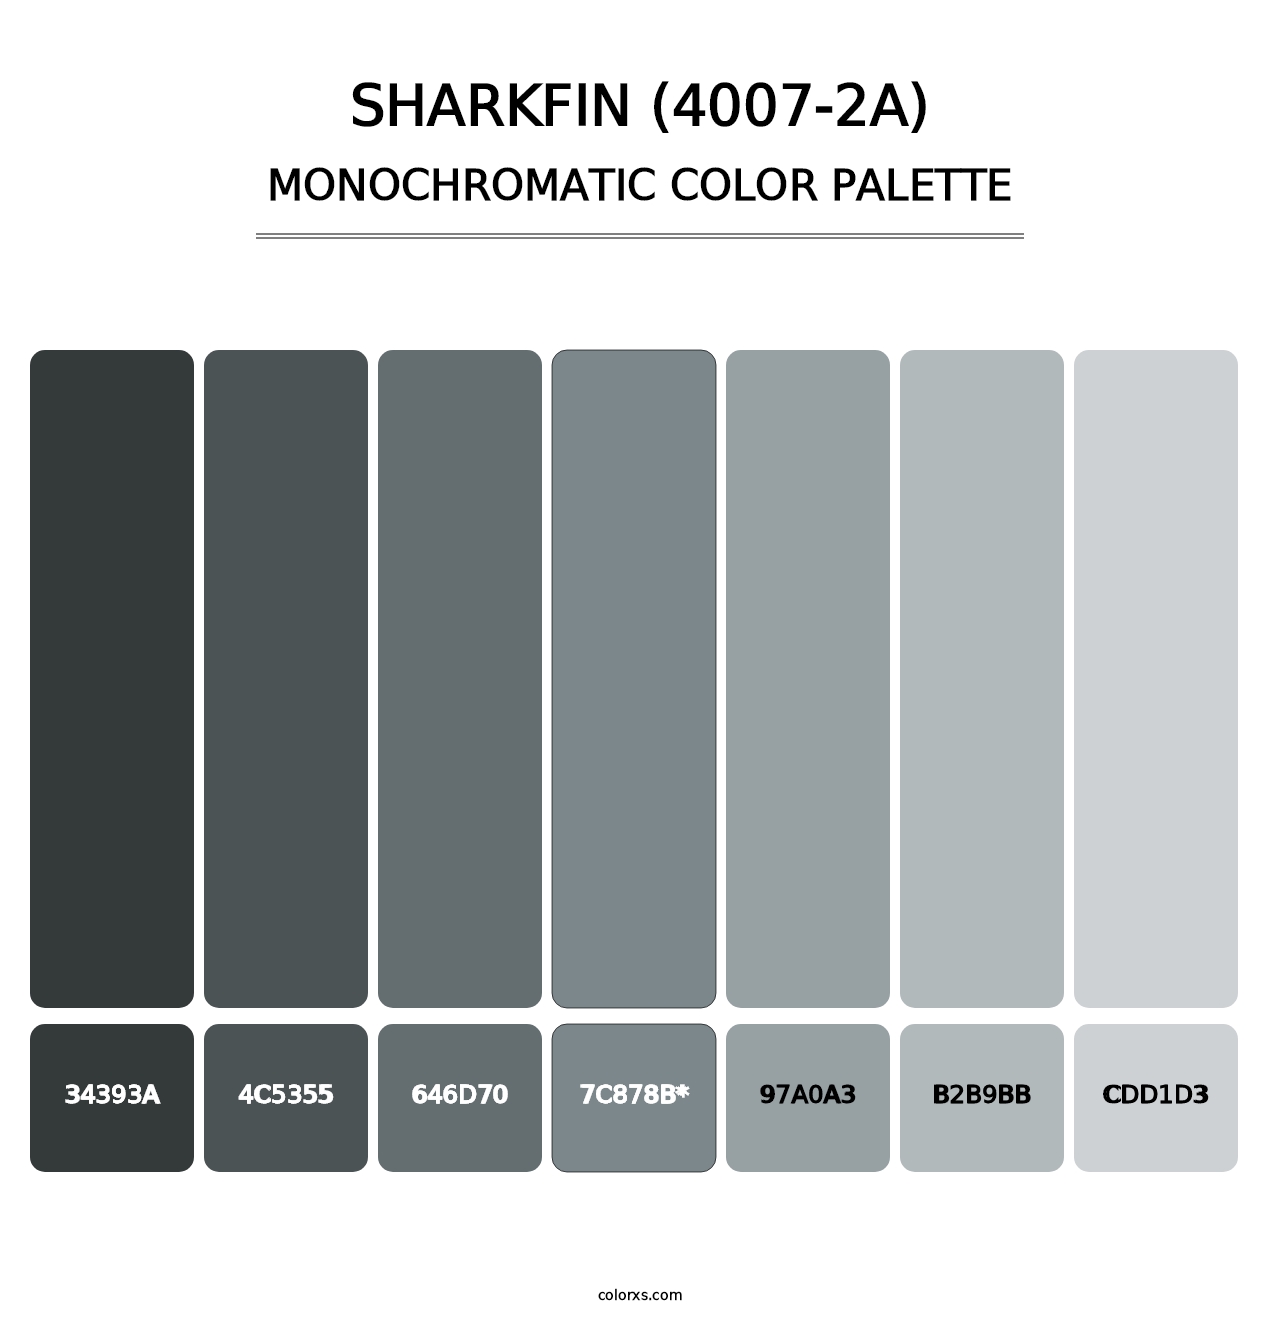 Sharkfin (4007-2A) - Monochromatic Color Palette